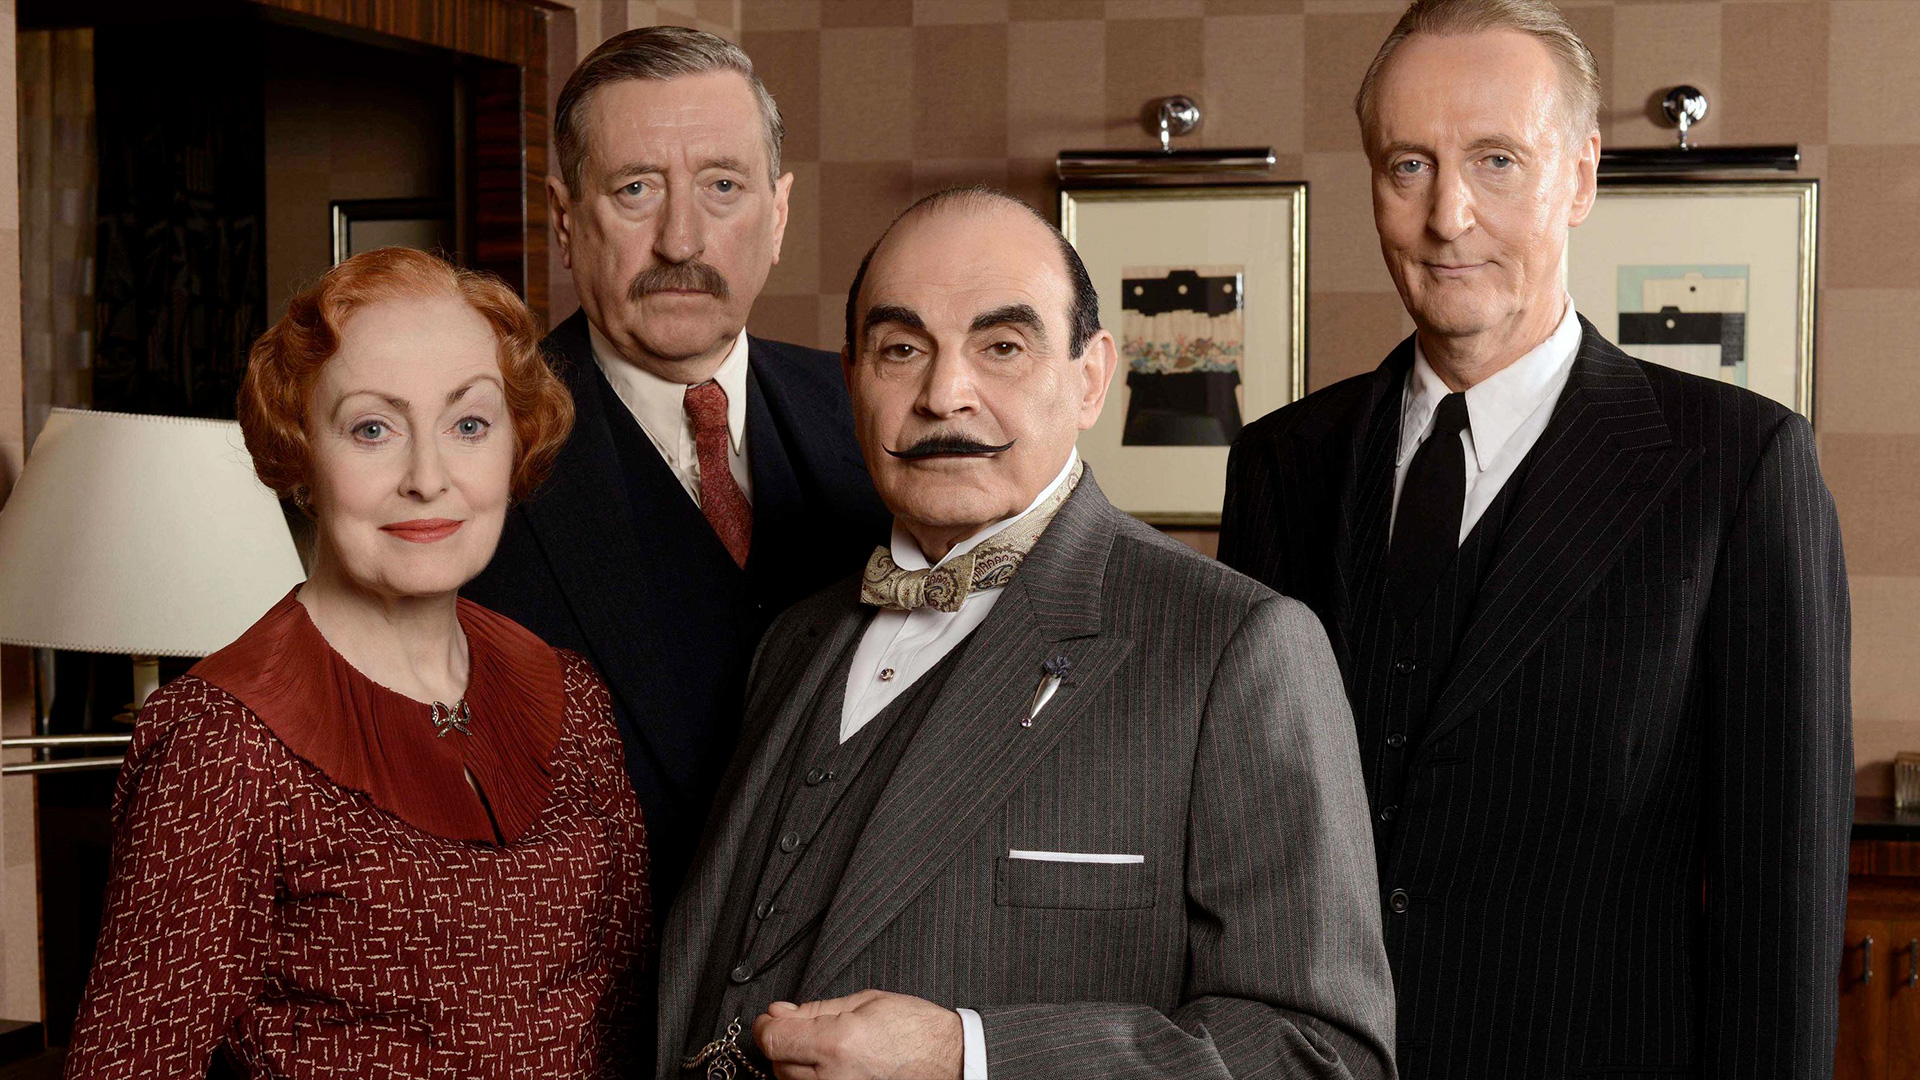 دانلود سریال Poirot